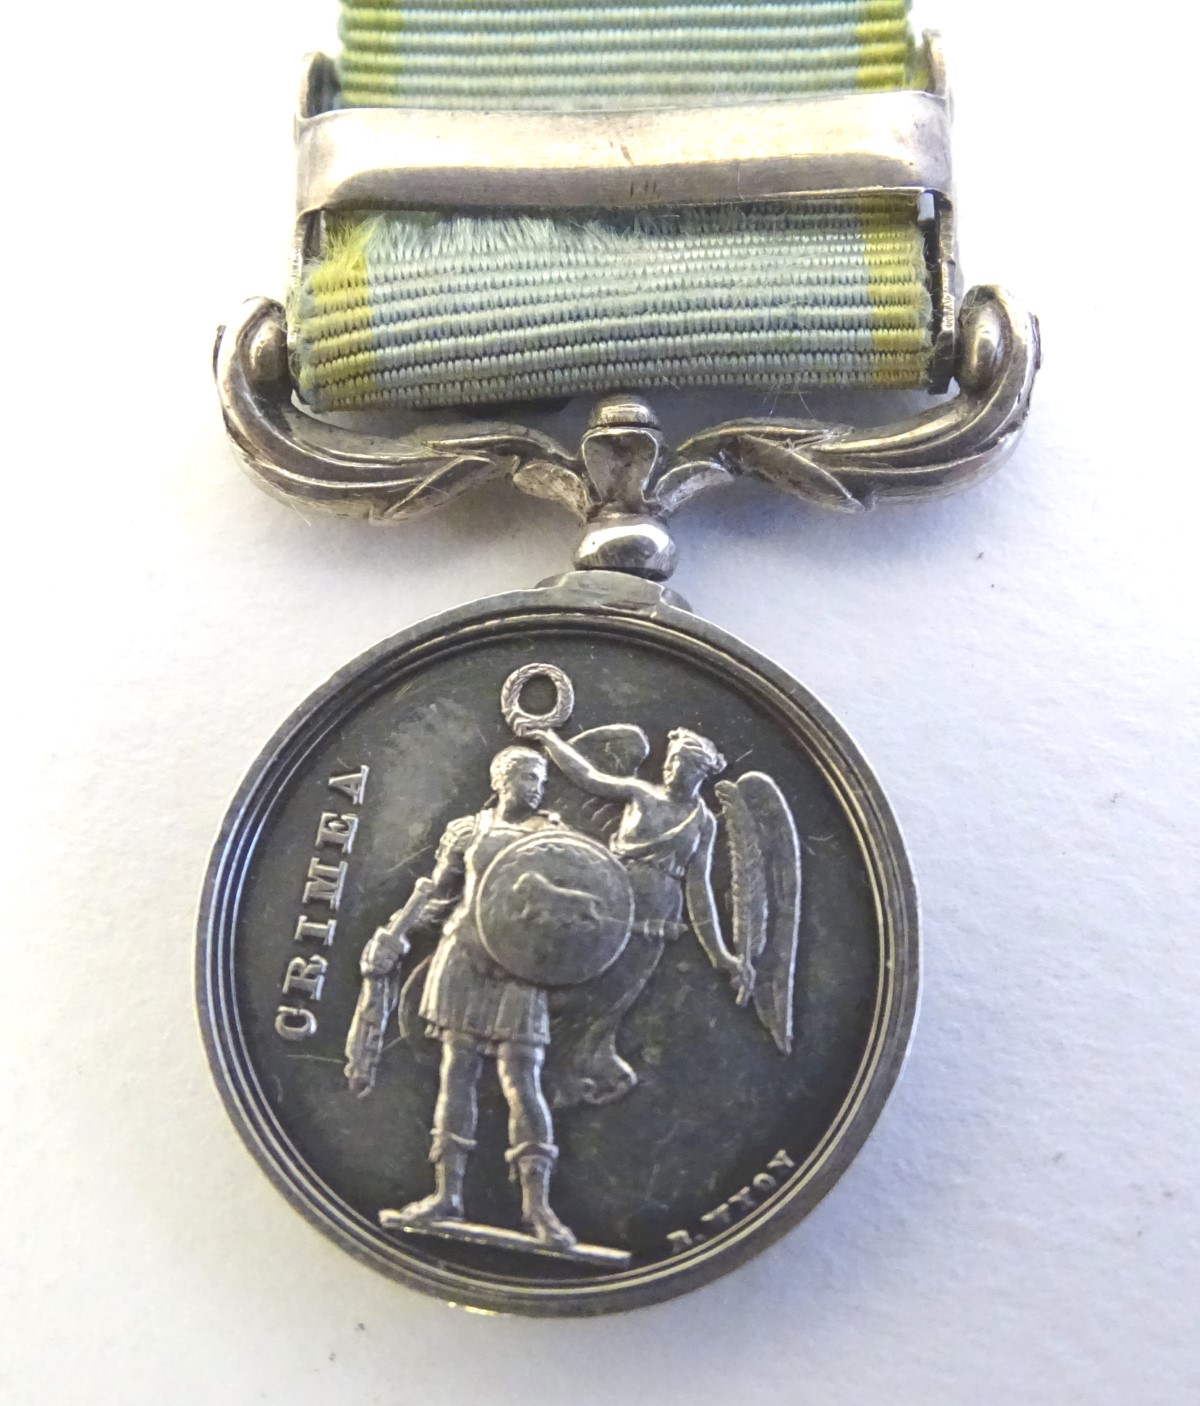 Militaria: a Victorian miniature Crimea Medal, with Sebastopol and Inkermann bars. 2" long ( - Image 3 of 7